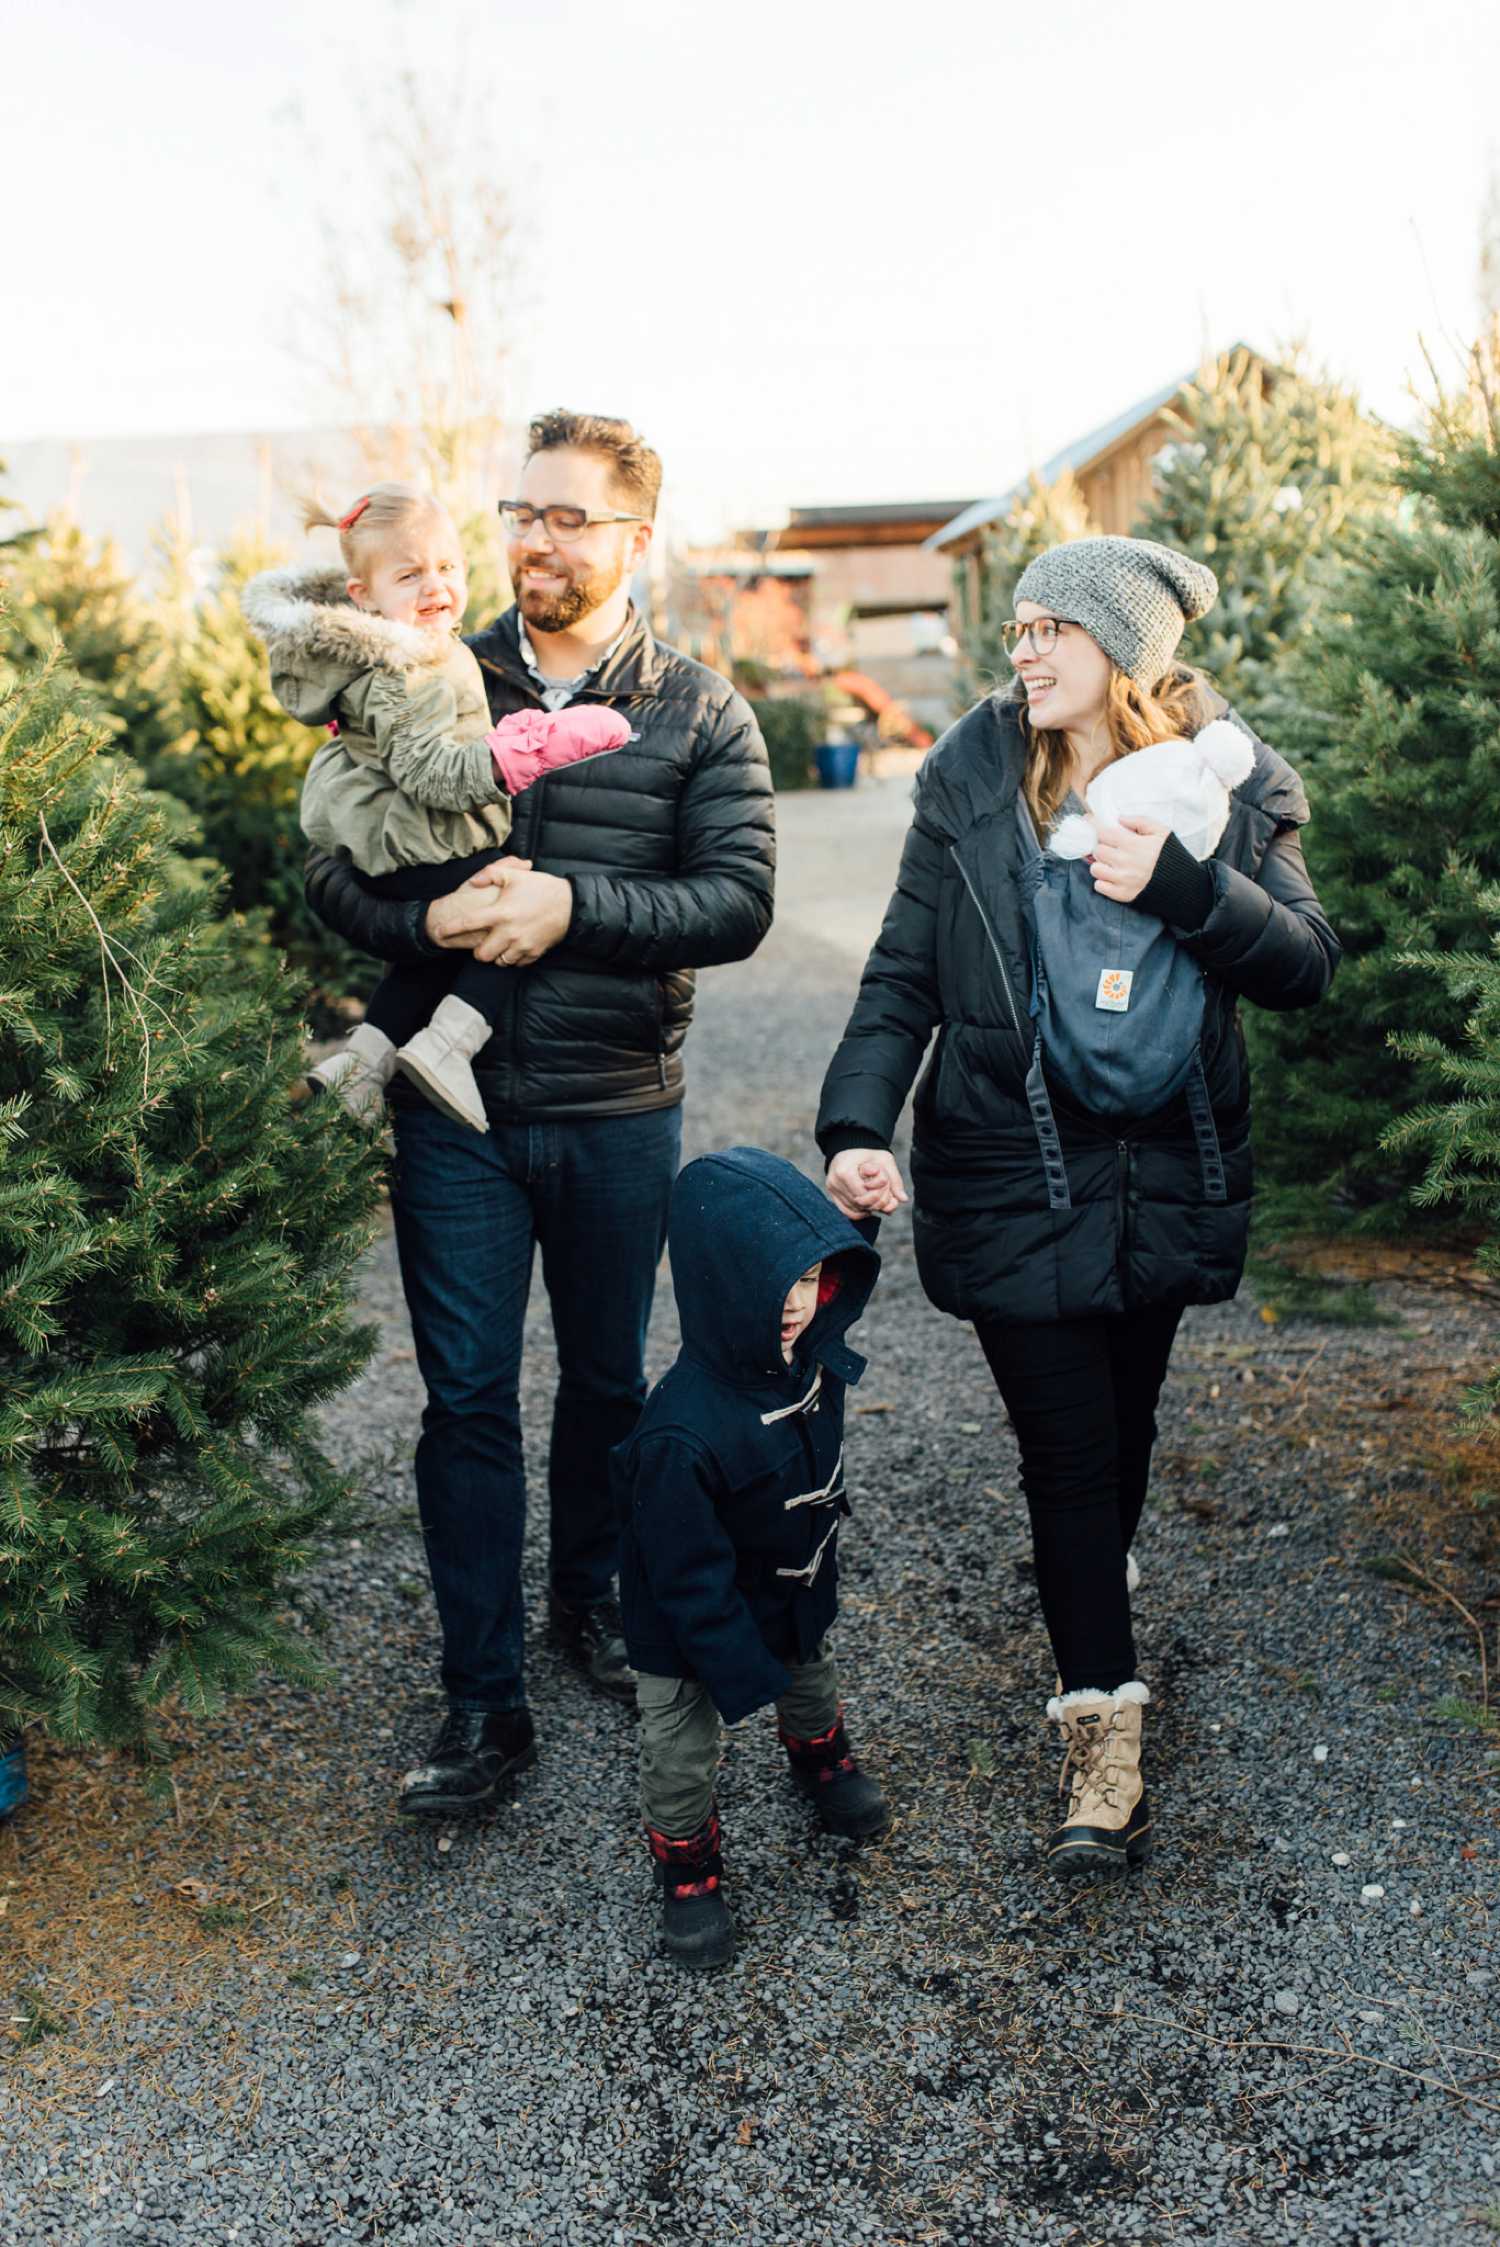 Gulish Family - Greensgrow Farm Christmas Tree - Philadelphia Family Lifestyle Photographer - Alison Dunn Photography photo